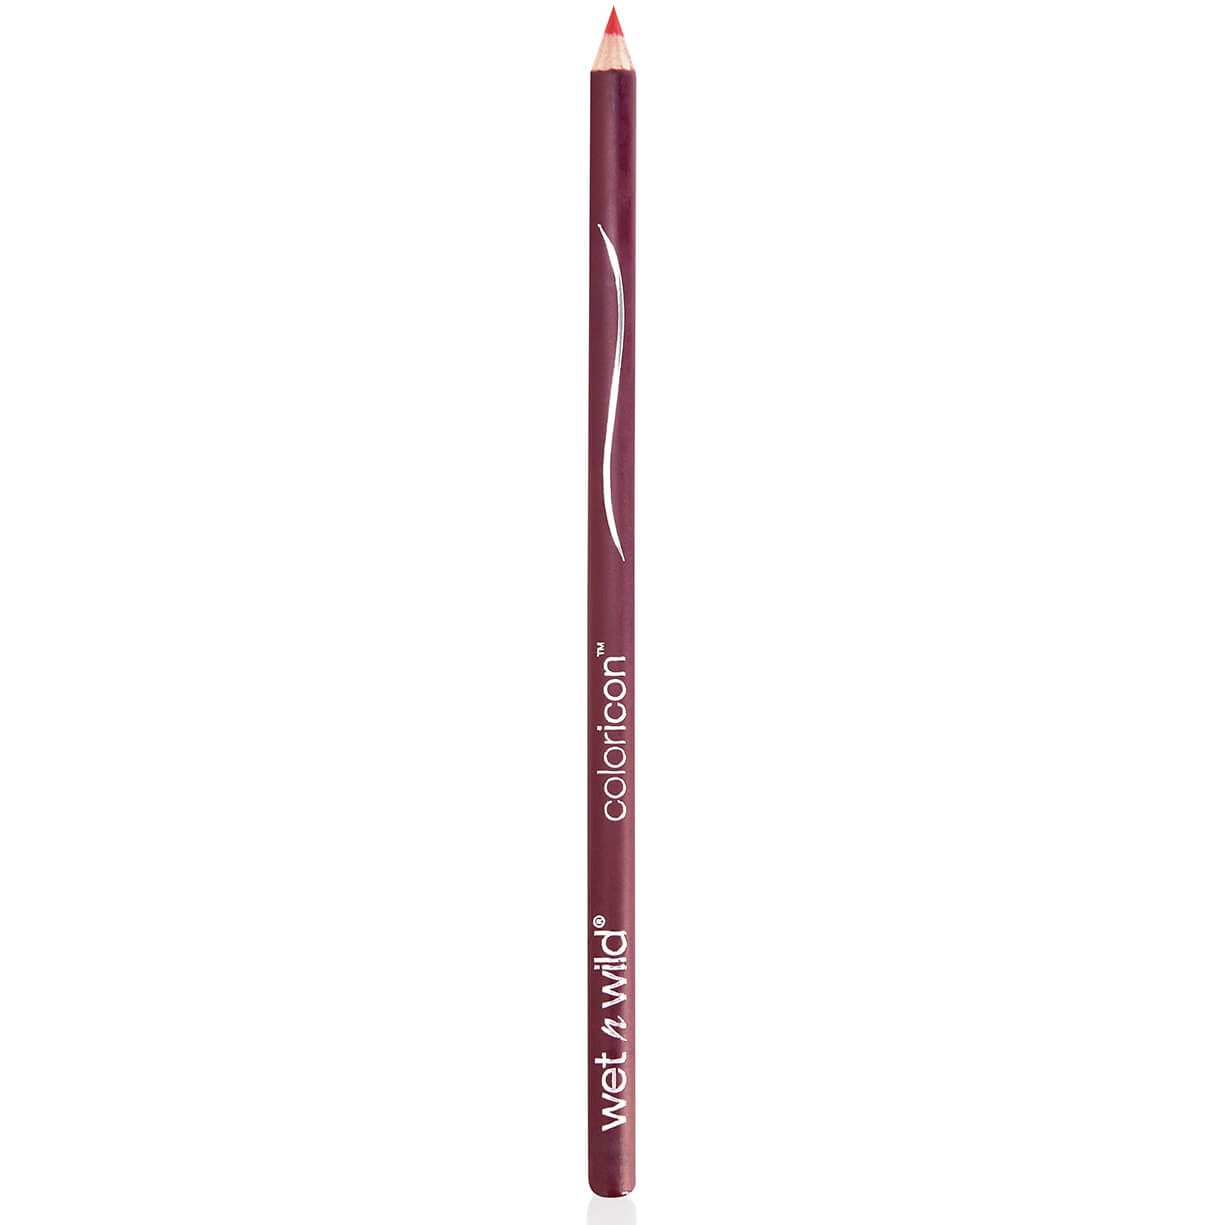 Wet n Wild Colouricon Lipliner Pencil, 1.4g, lip liner, London Loves Beauty